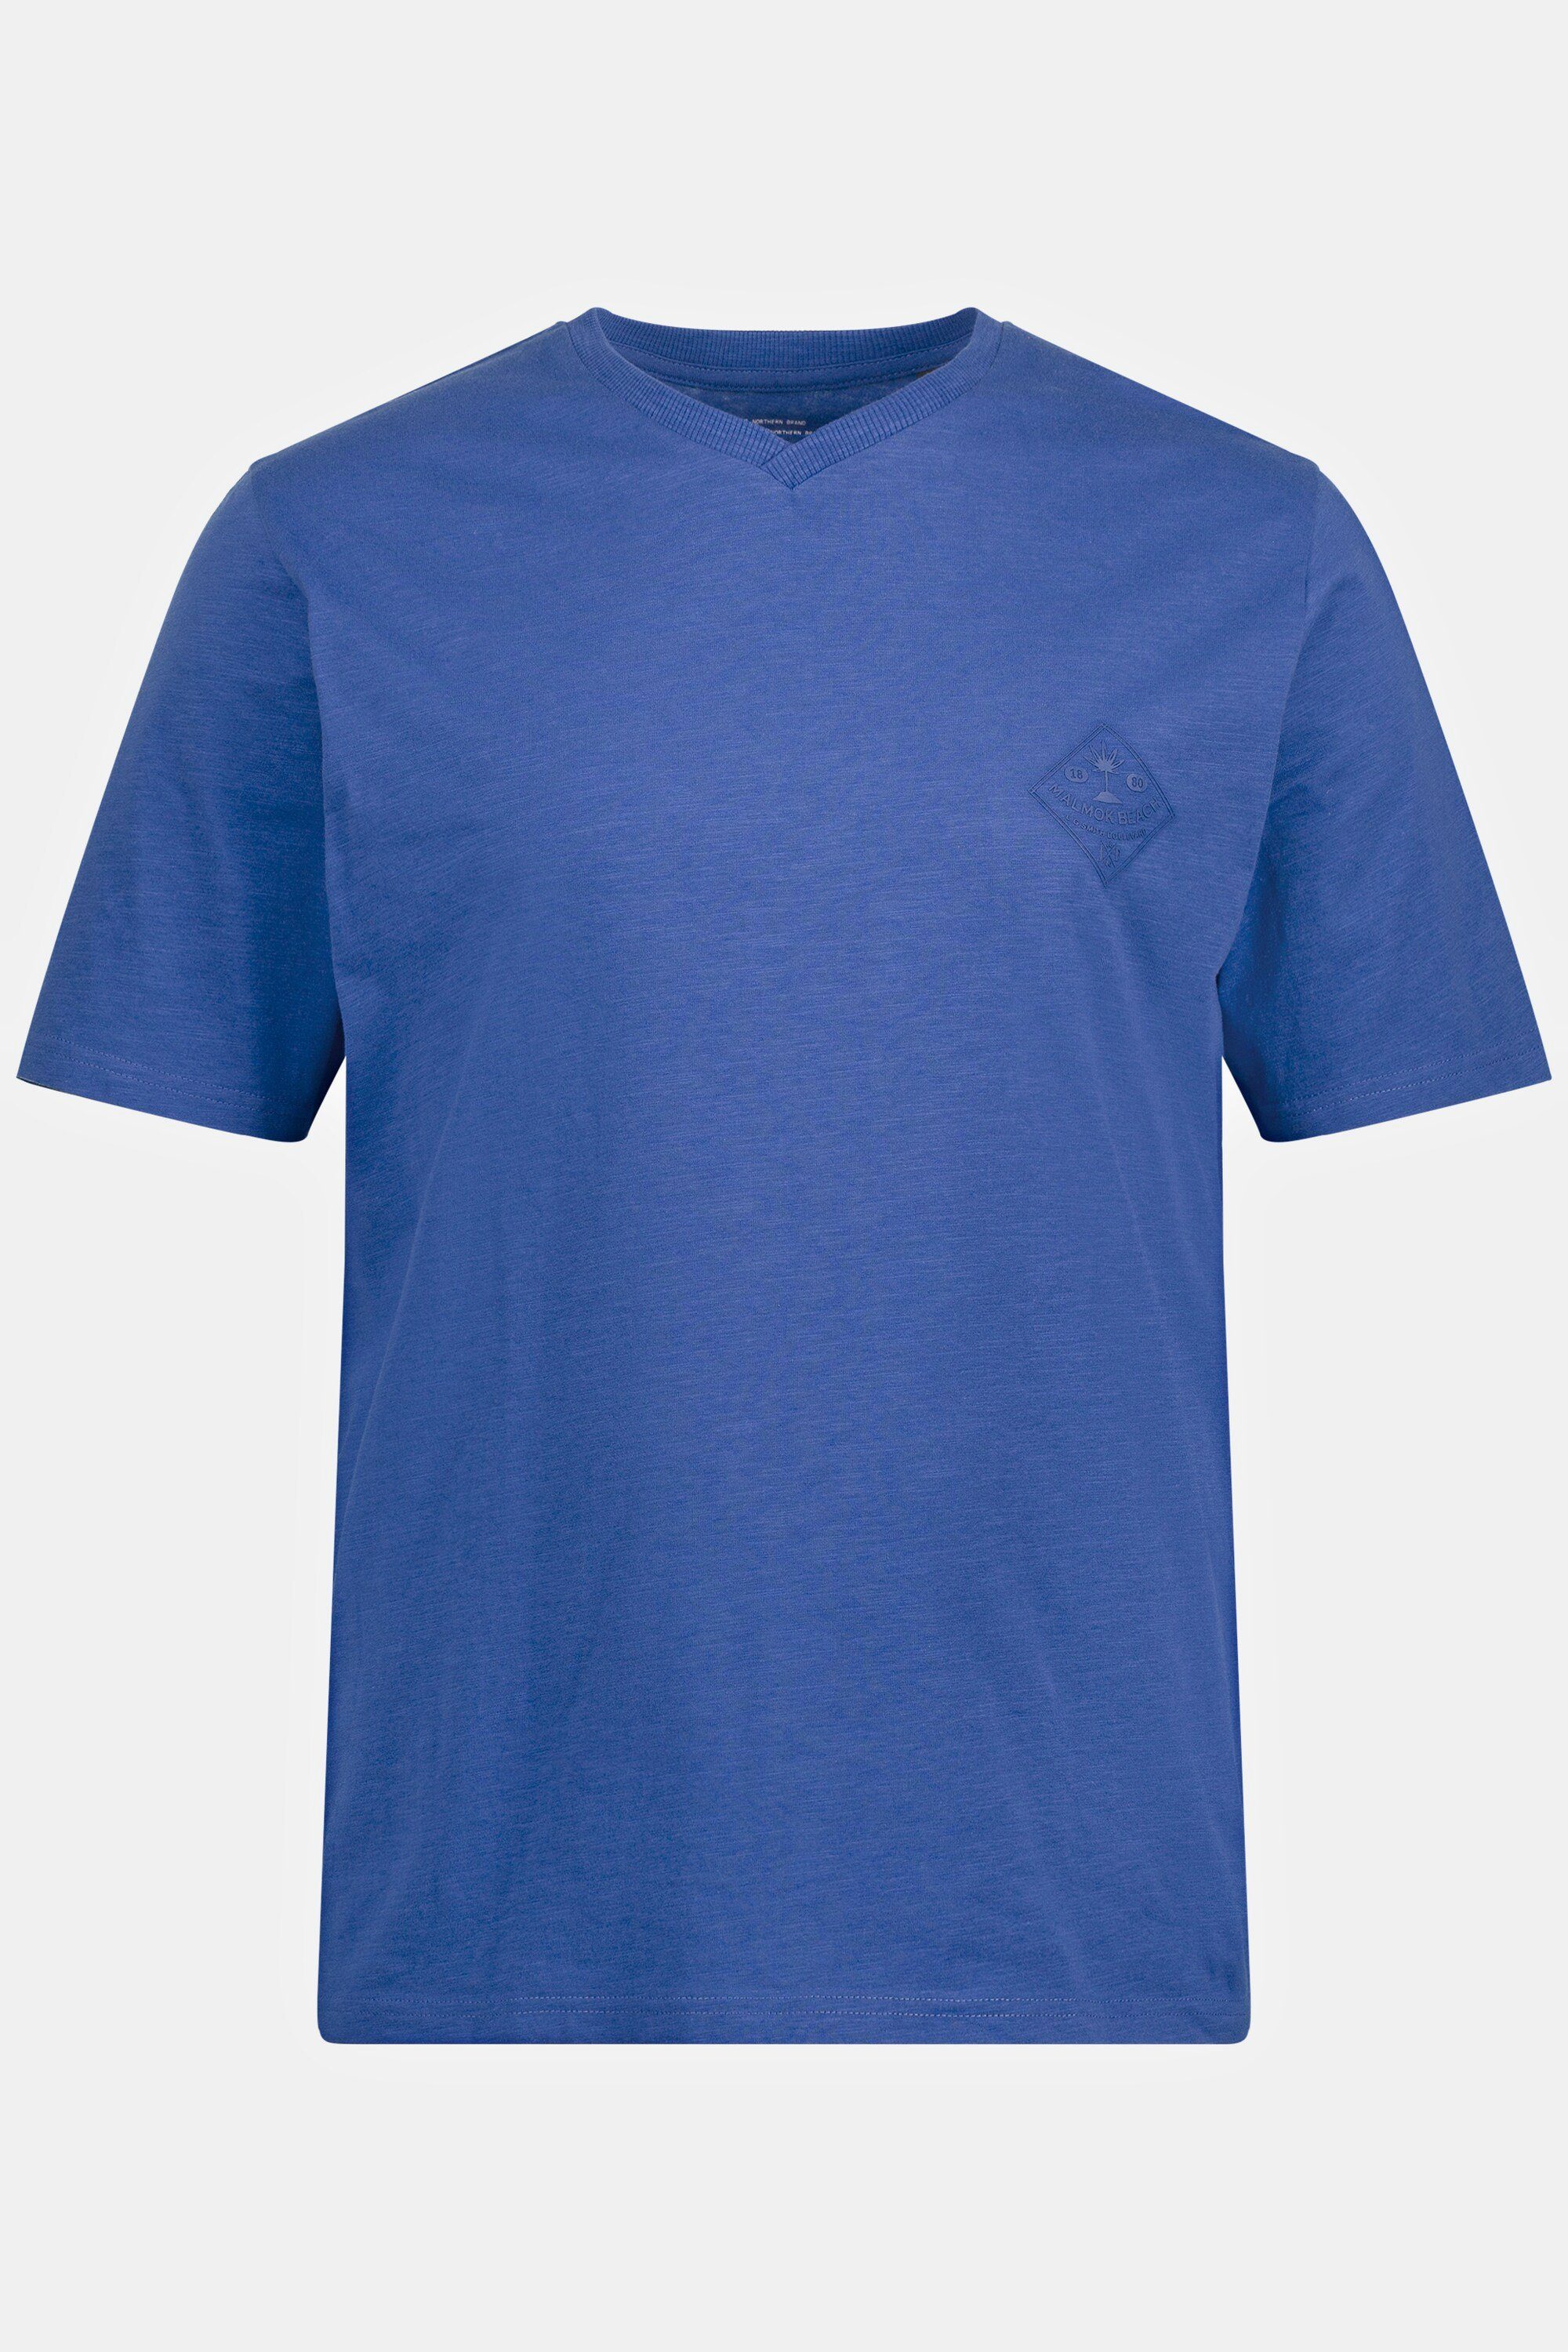 T-Shirt blau T-Shirt JP1880 Halbarm V-Ausschnitt